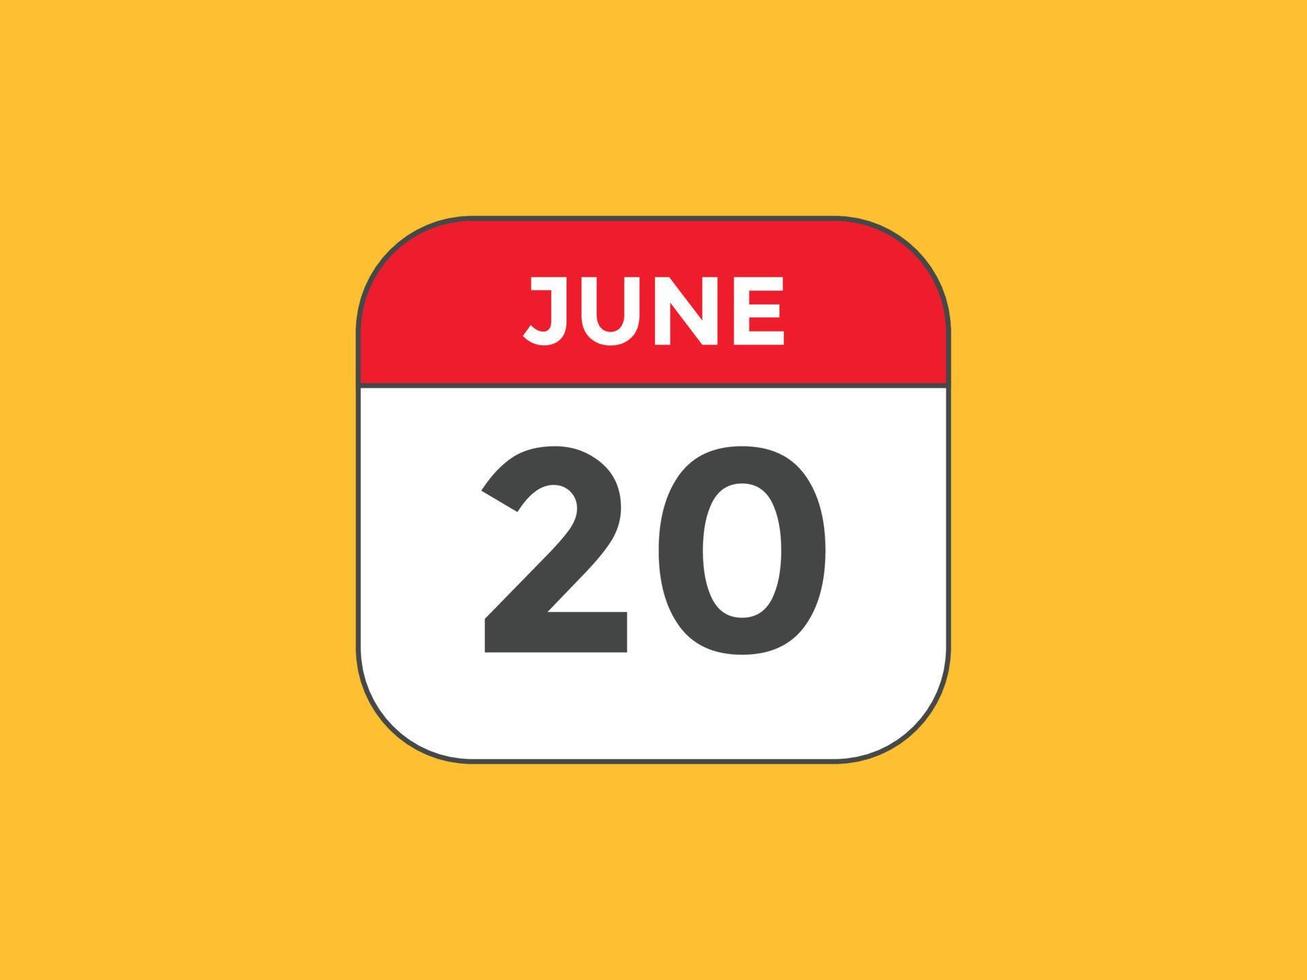 june 20 calendar reminder. 20th june daily calendar icon template. Calendar 20th june icon Design template. Vector illustration